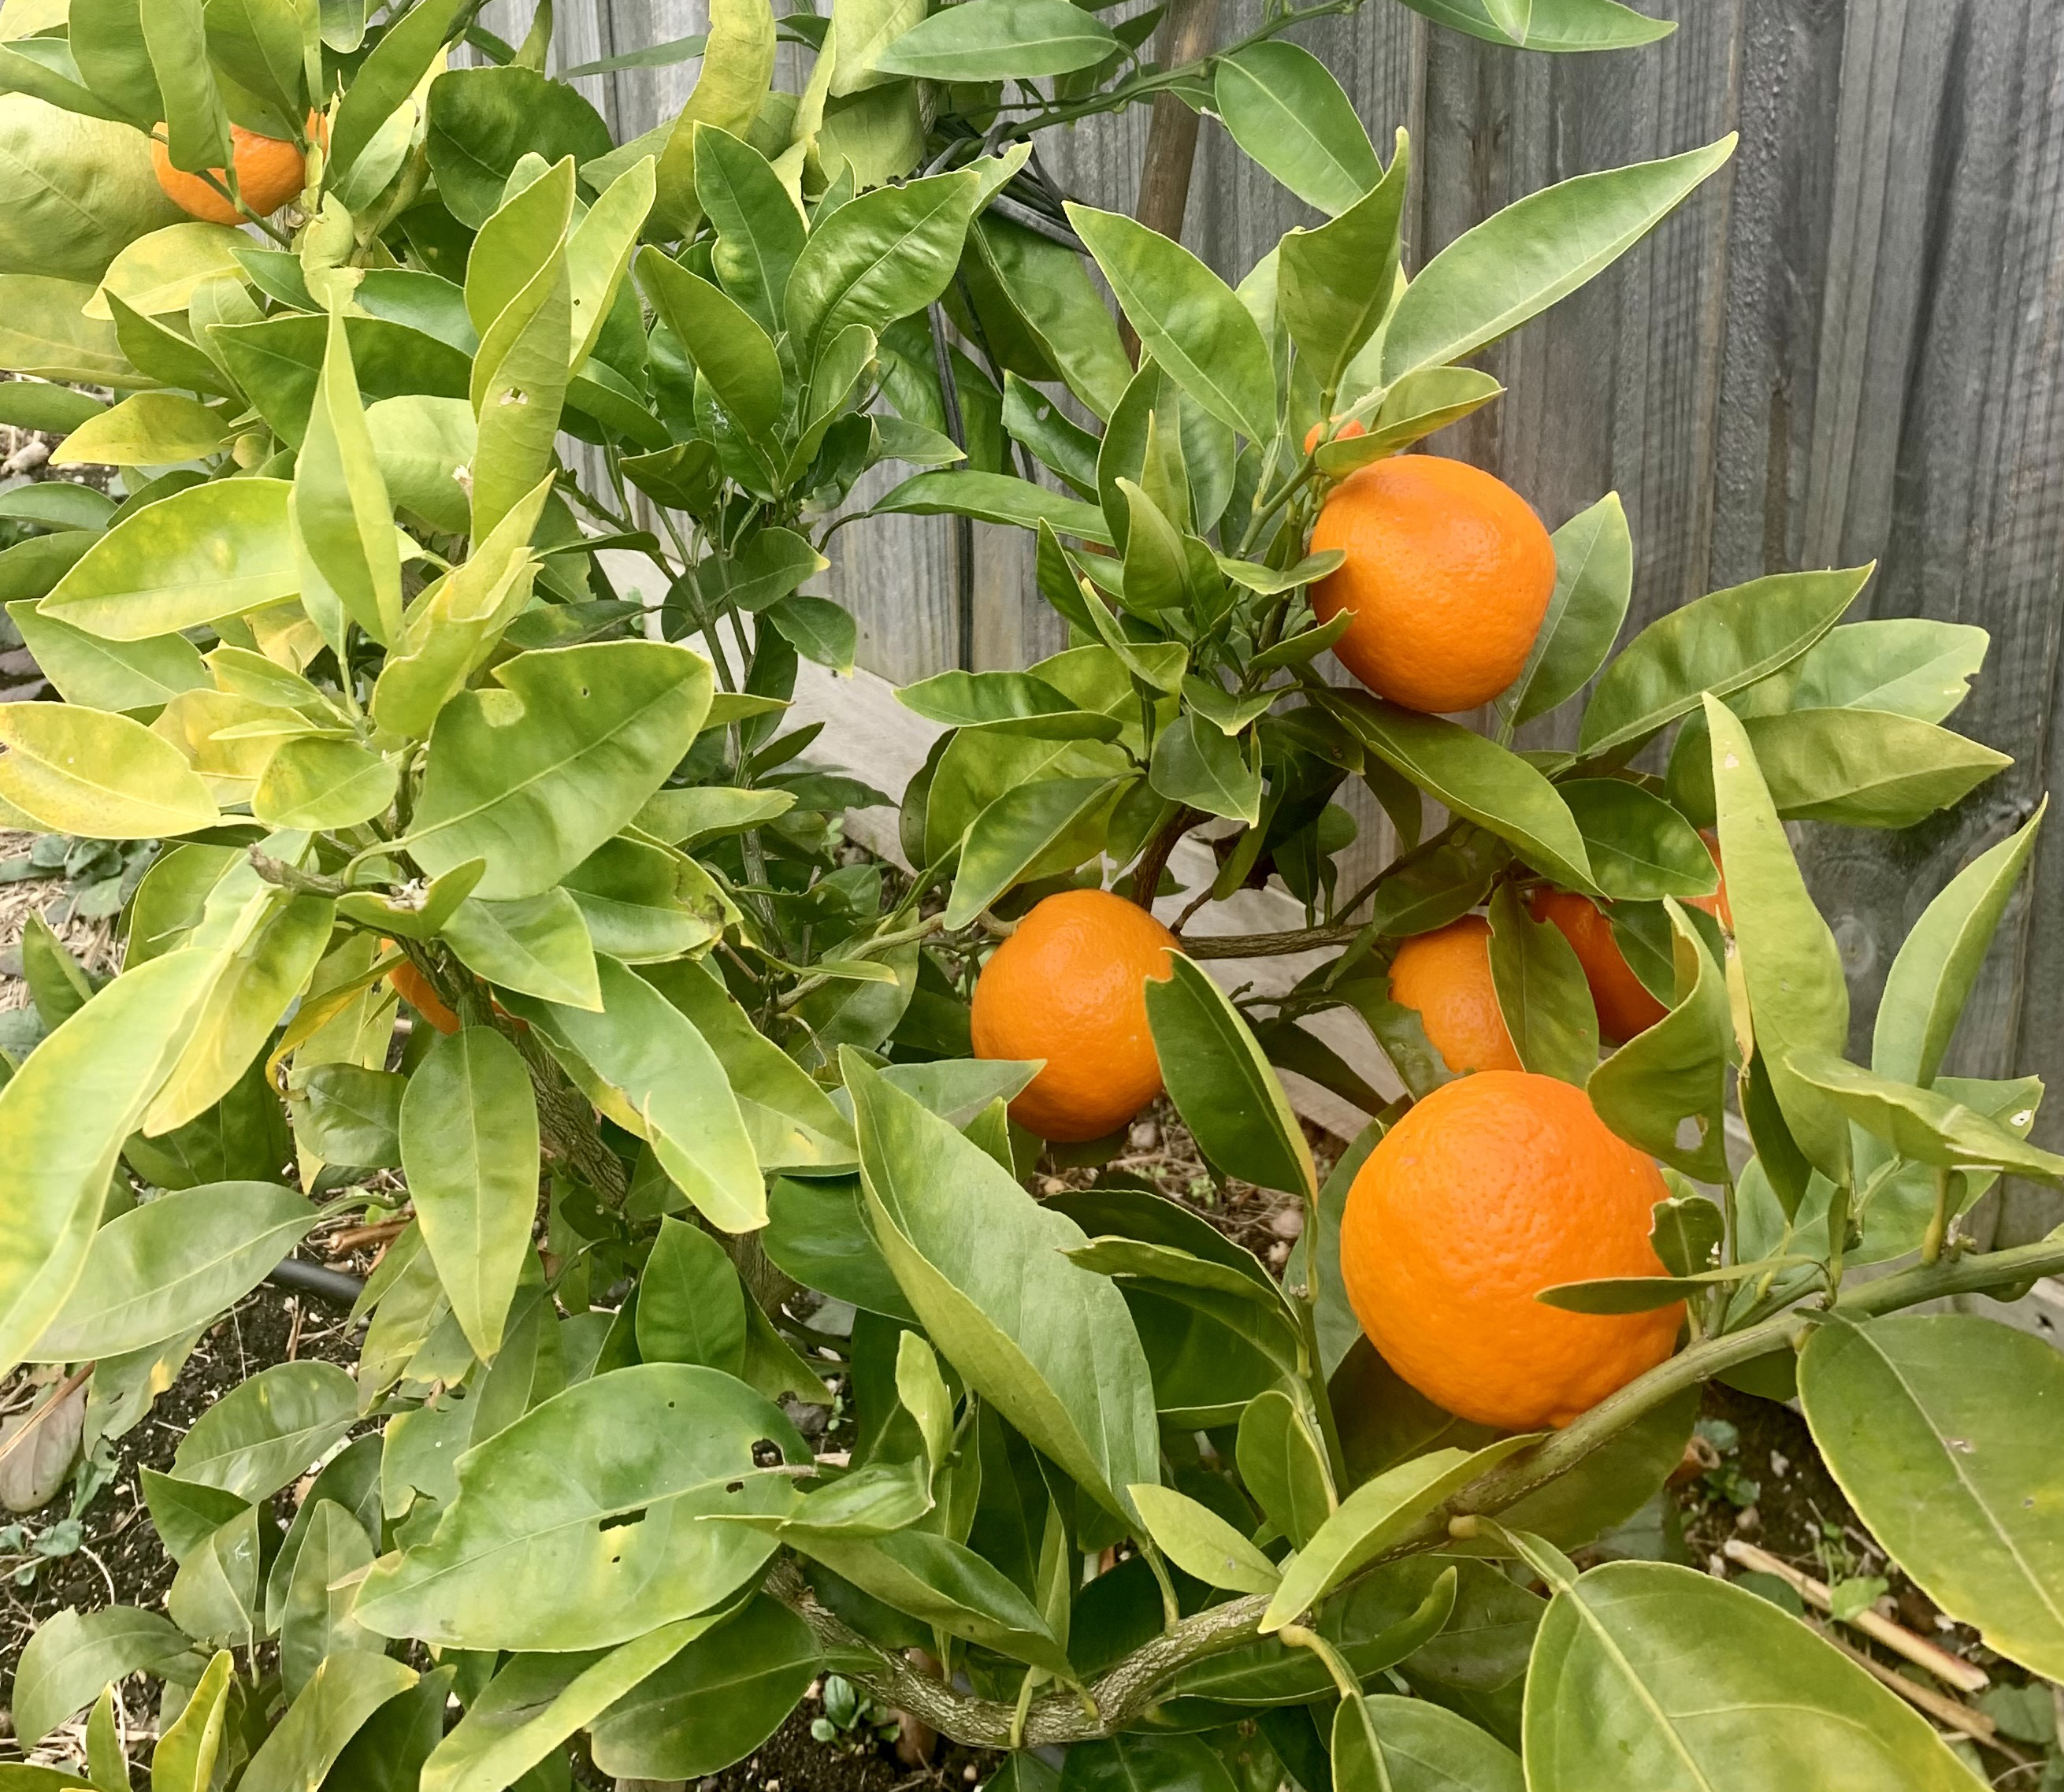 A festival of Oranges